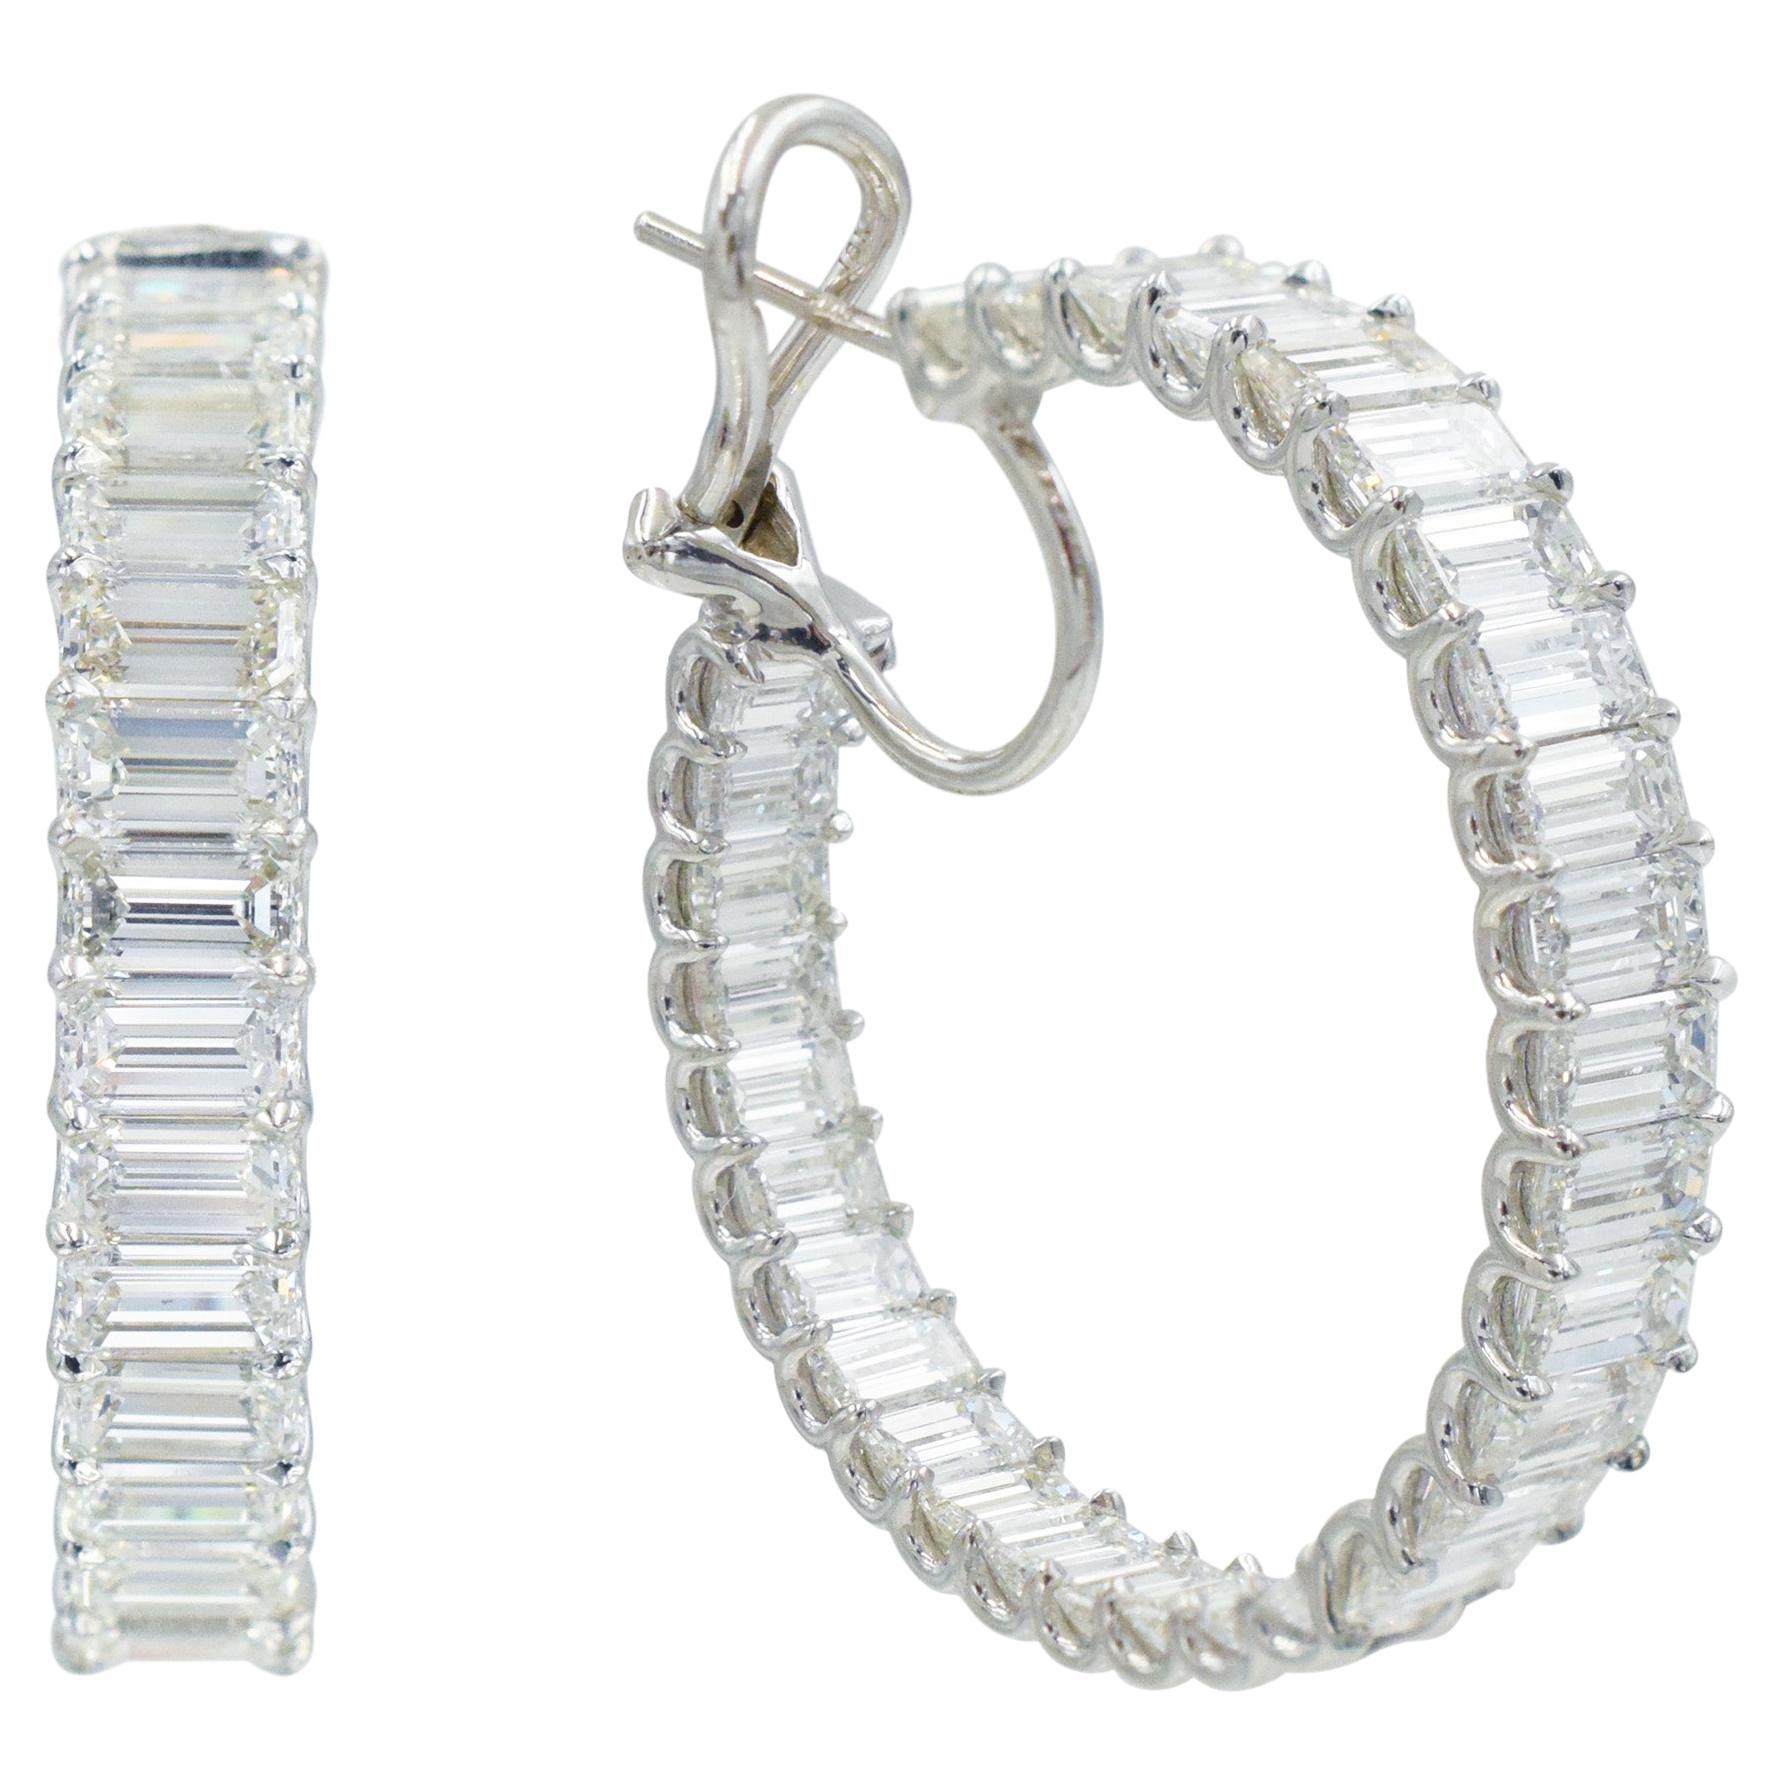 18.78ct Diamond Inside-Out Hoop Earrings in 18k white gold. The earrings consist of 64 emerald
cut diamonds 